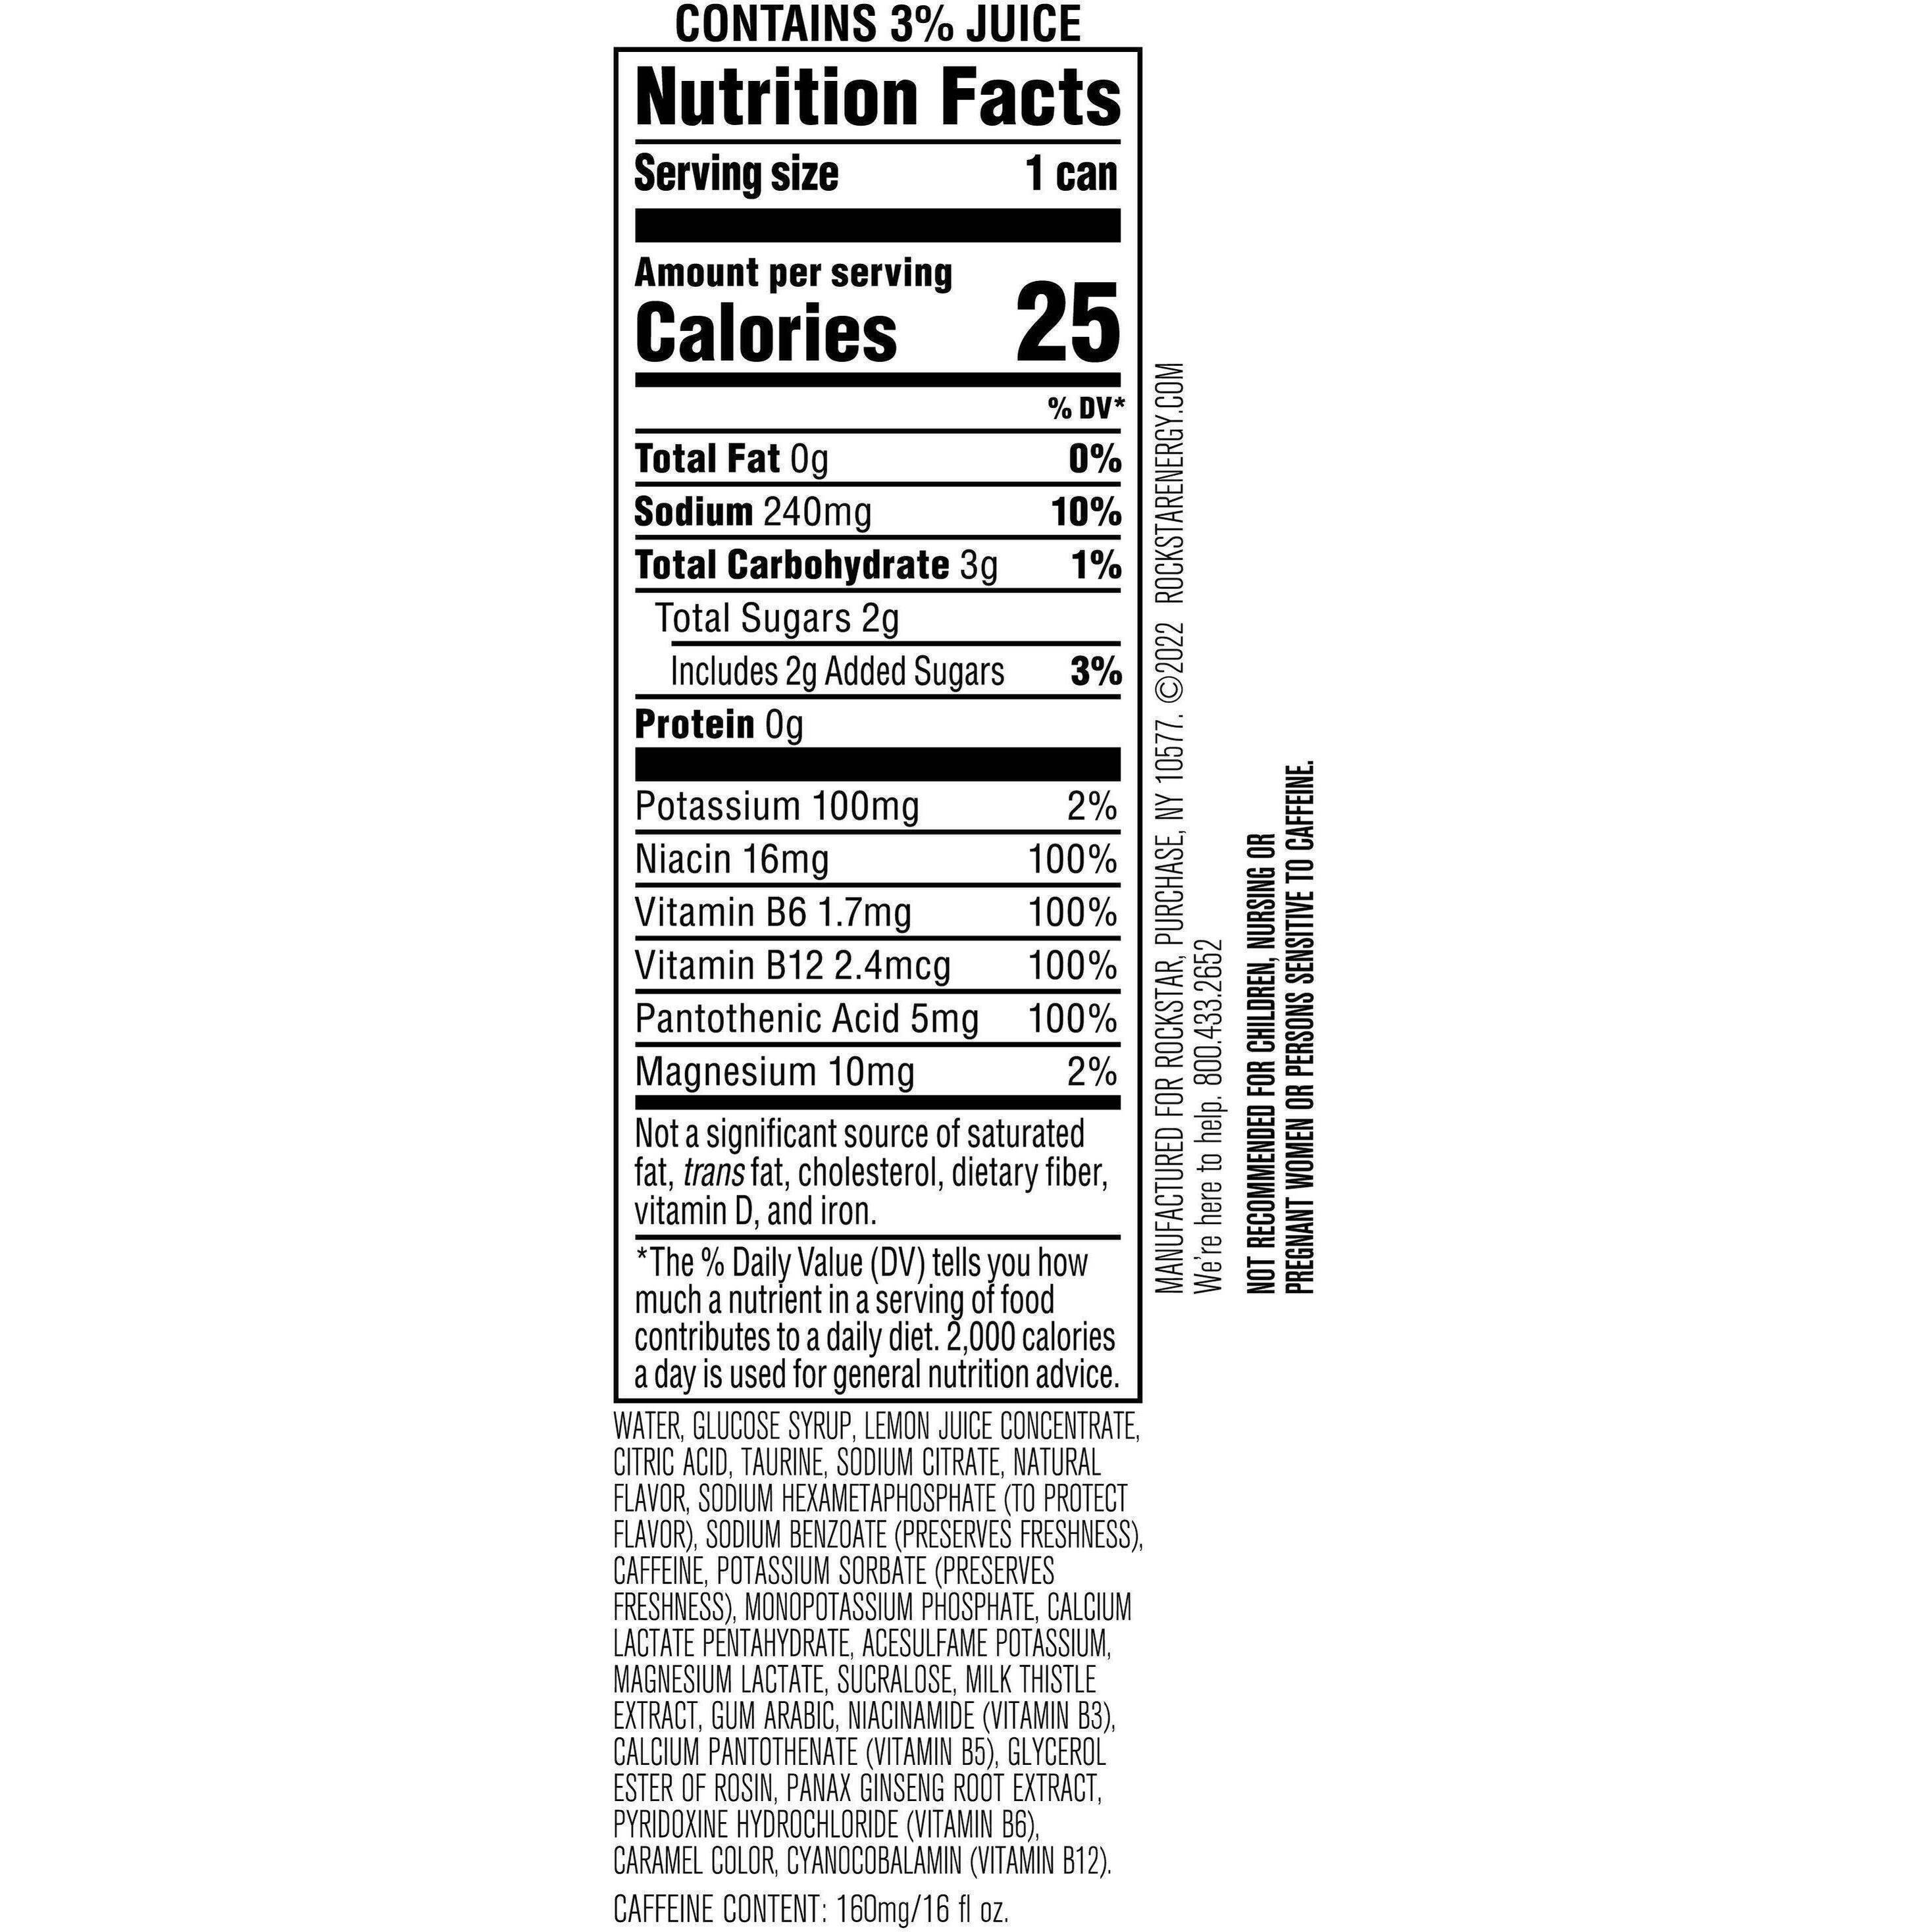 Image describing nutrition information for product Rockstar Recovery Lemonade